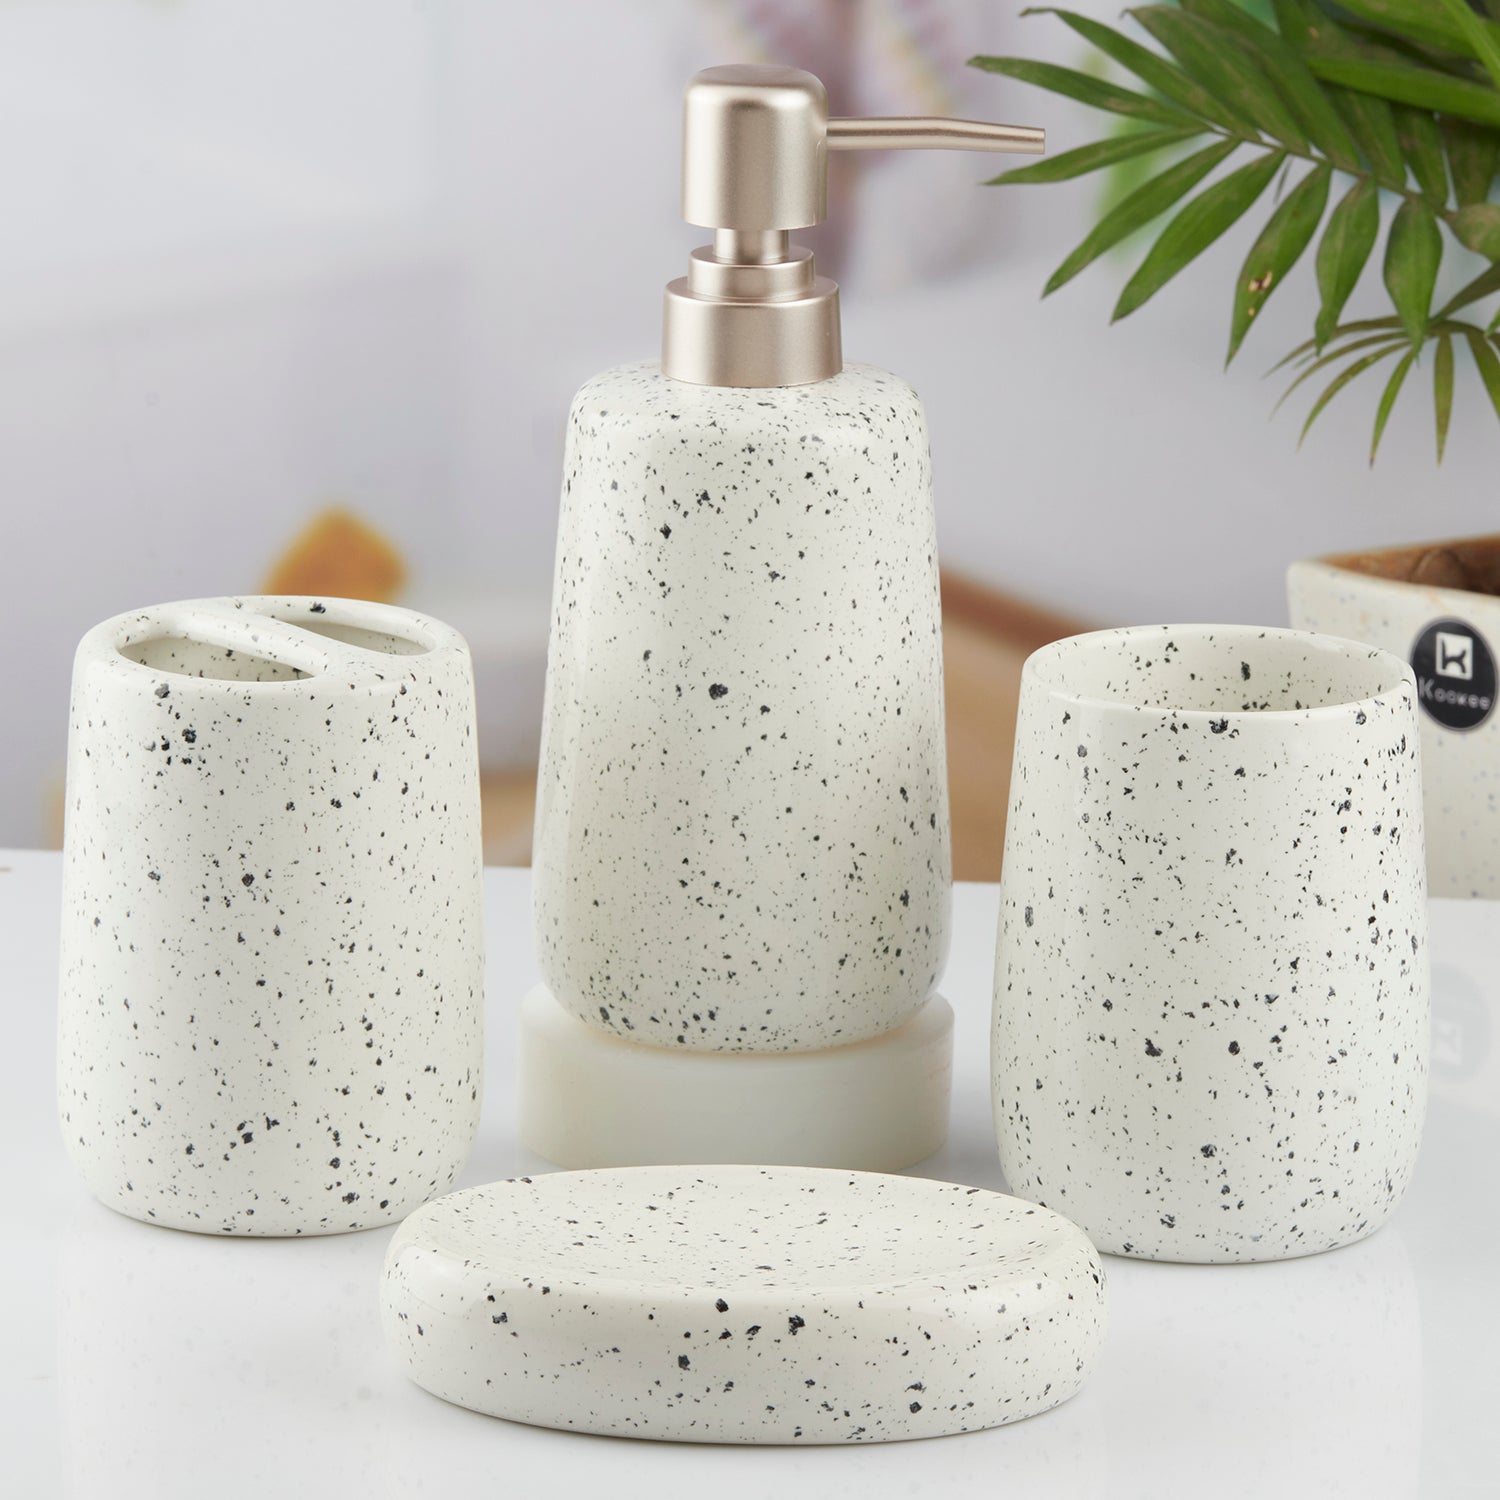 Ceramic Bathroom Set of 4 with Soap Dispenser (10383)